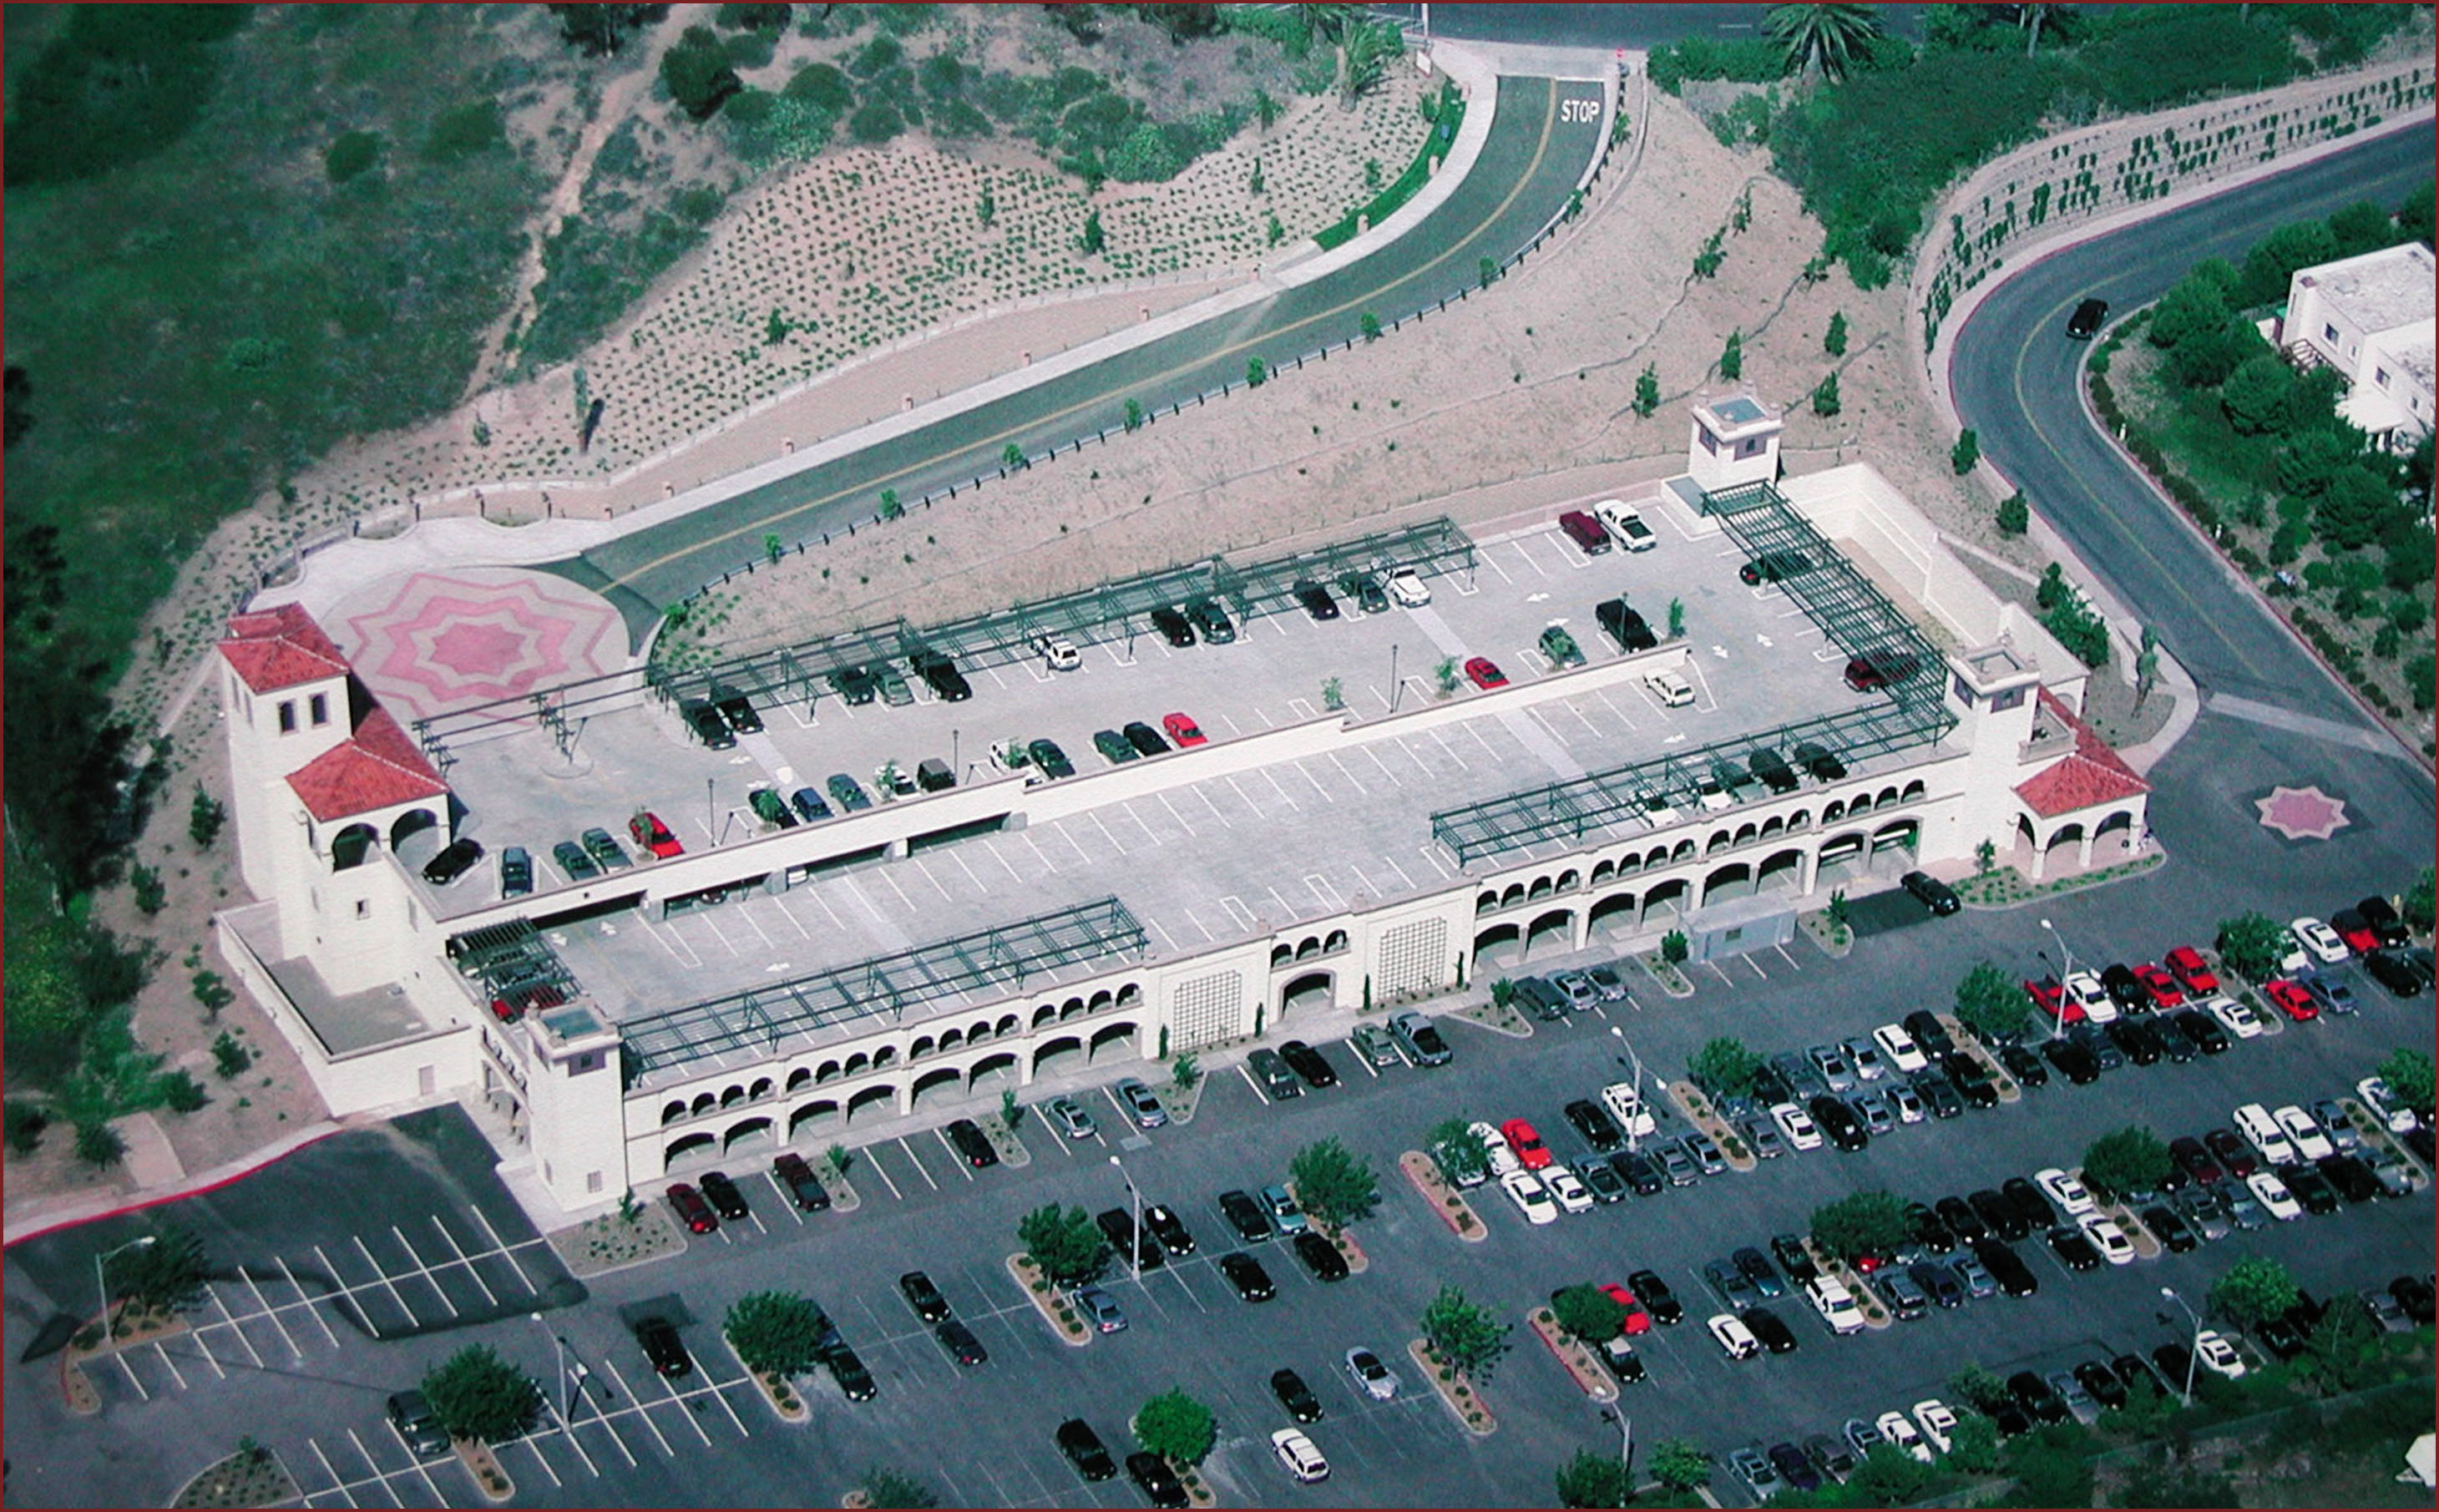 University of Diego Parking